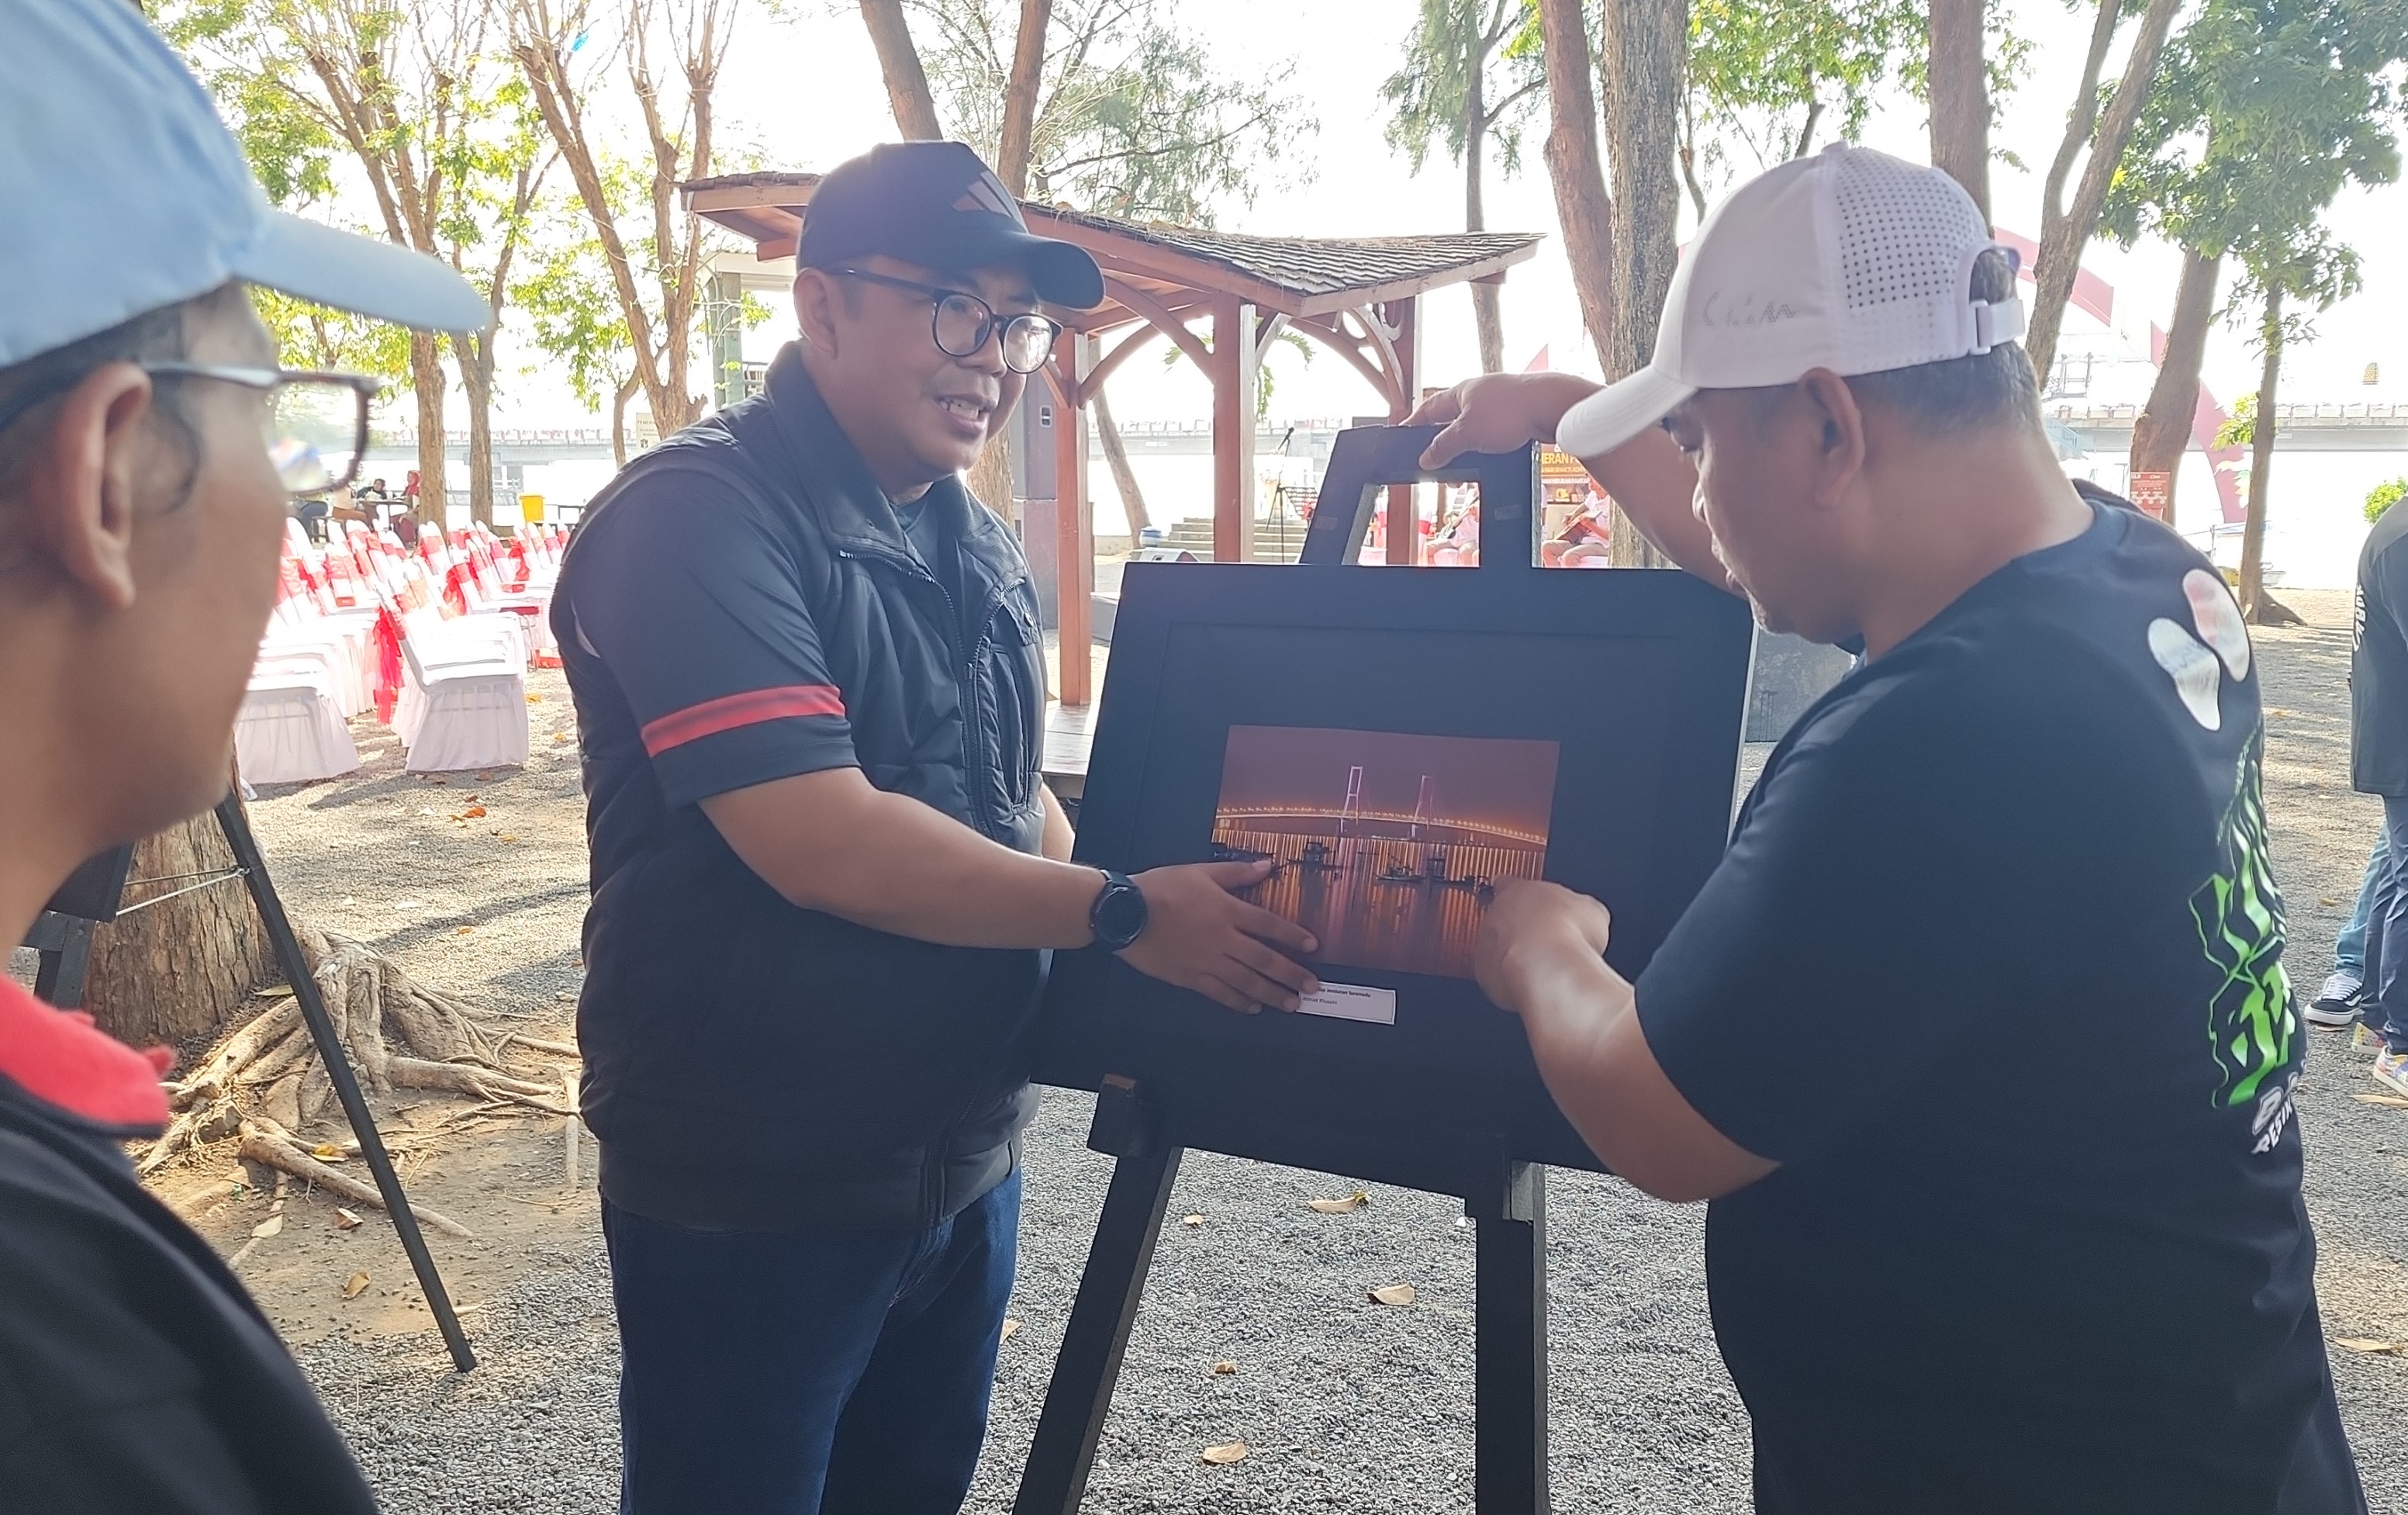 Info Pusat! Calon Juara Lomba Foto Explore Surabaya Utara Ada Nuansa Laut